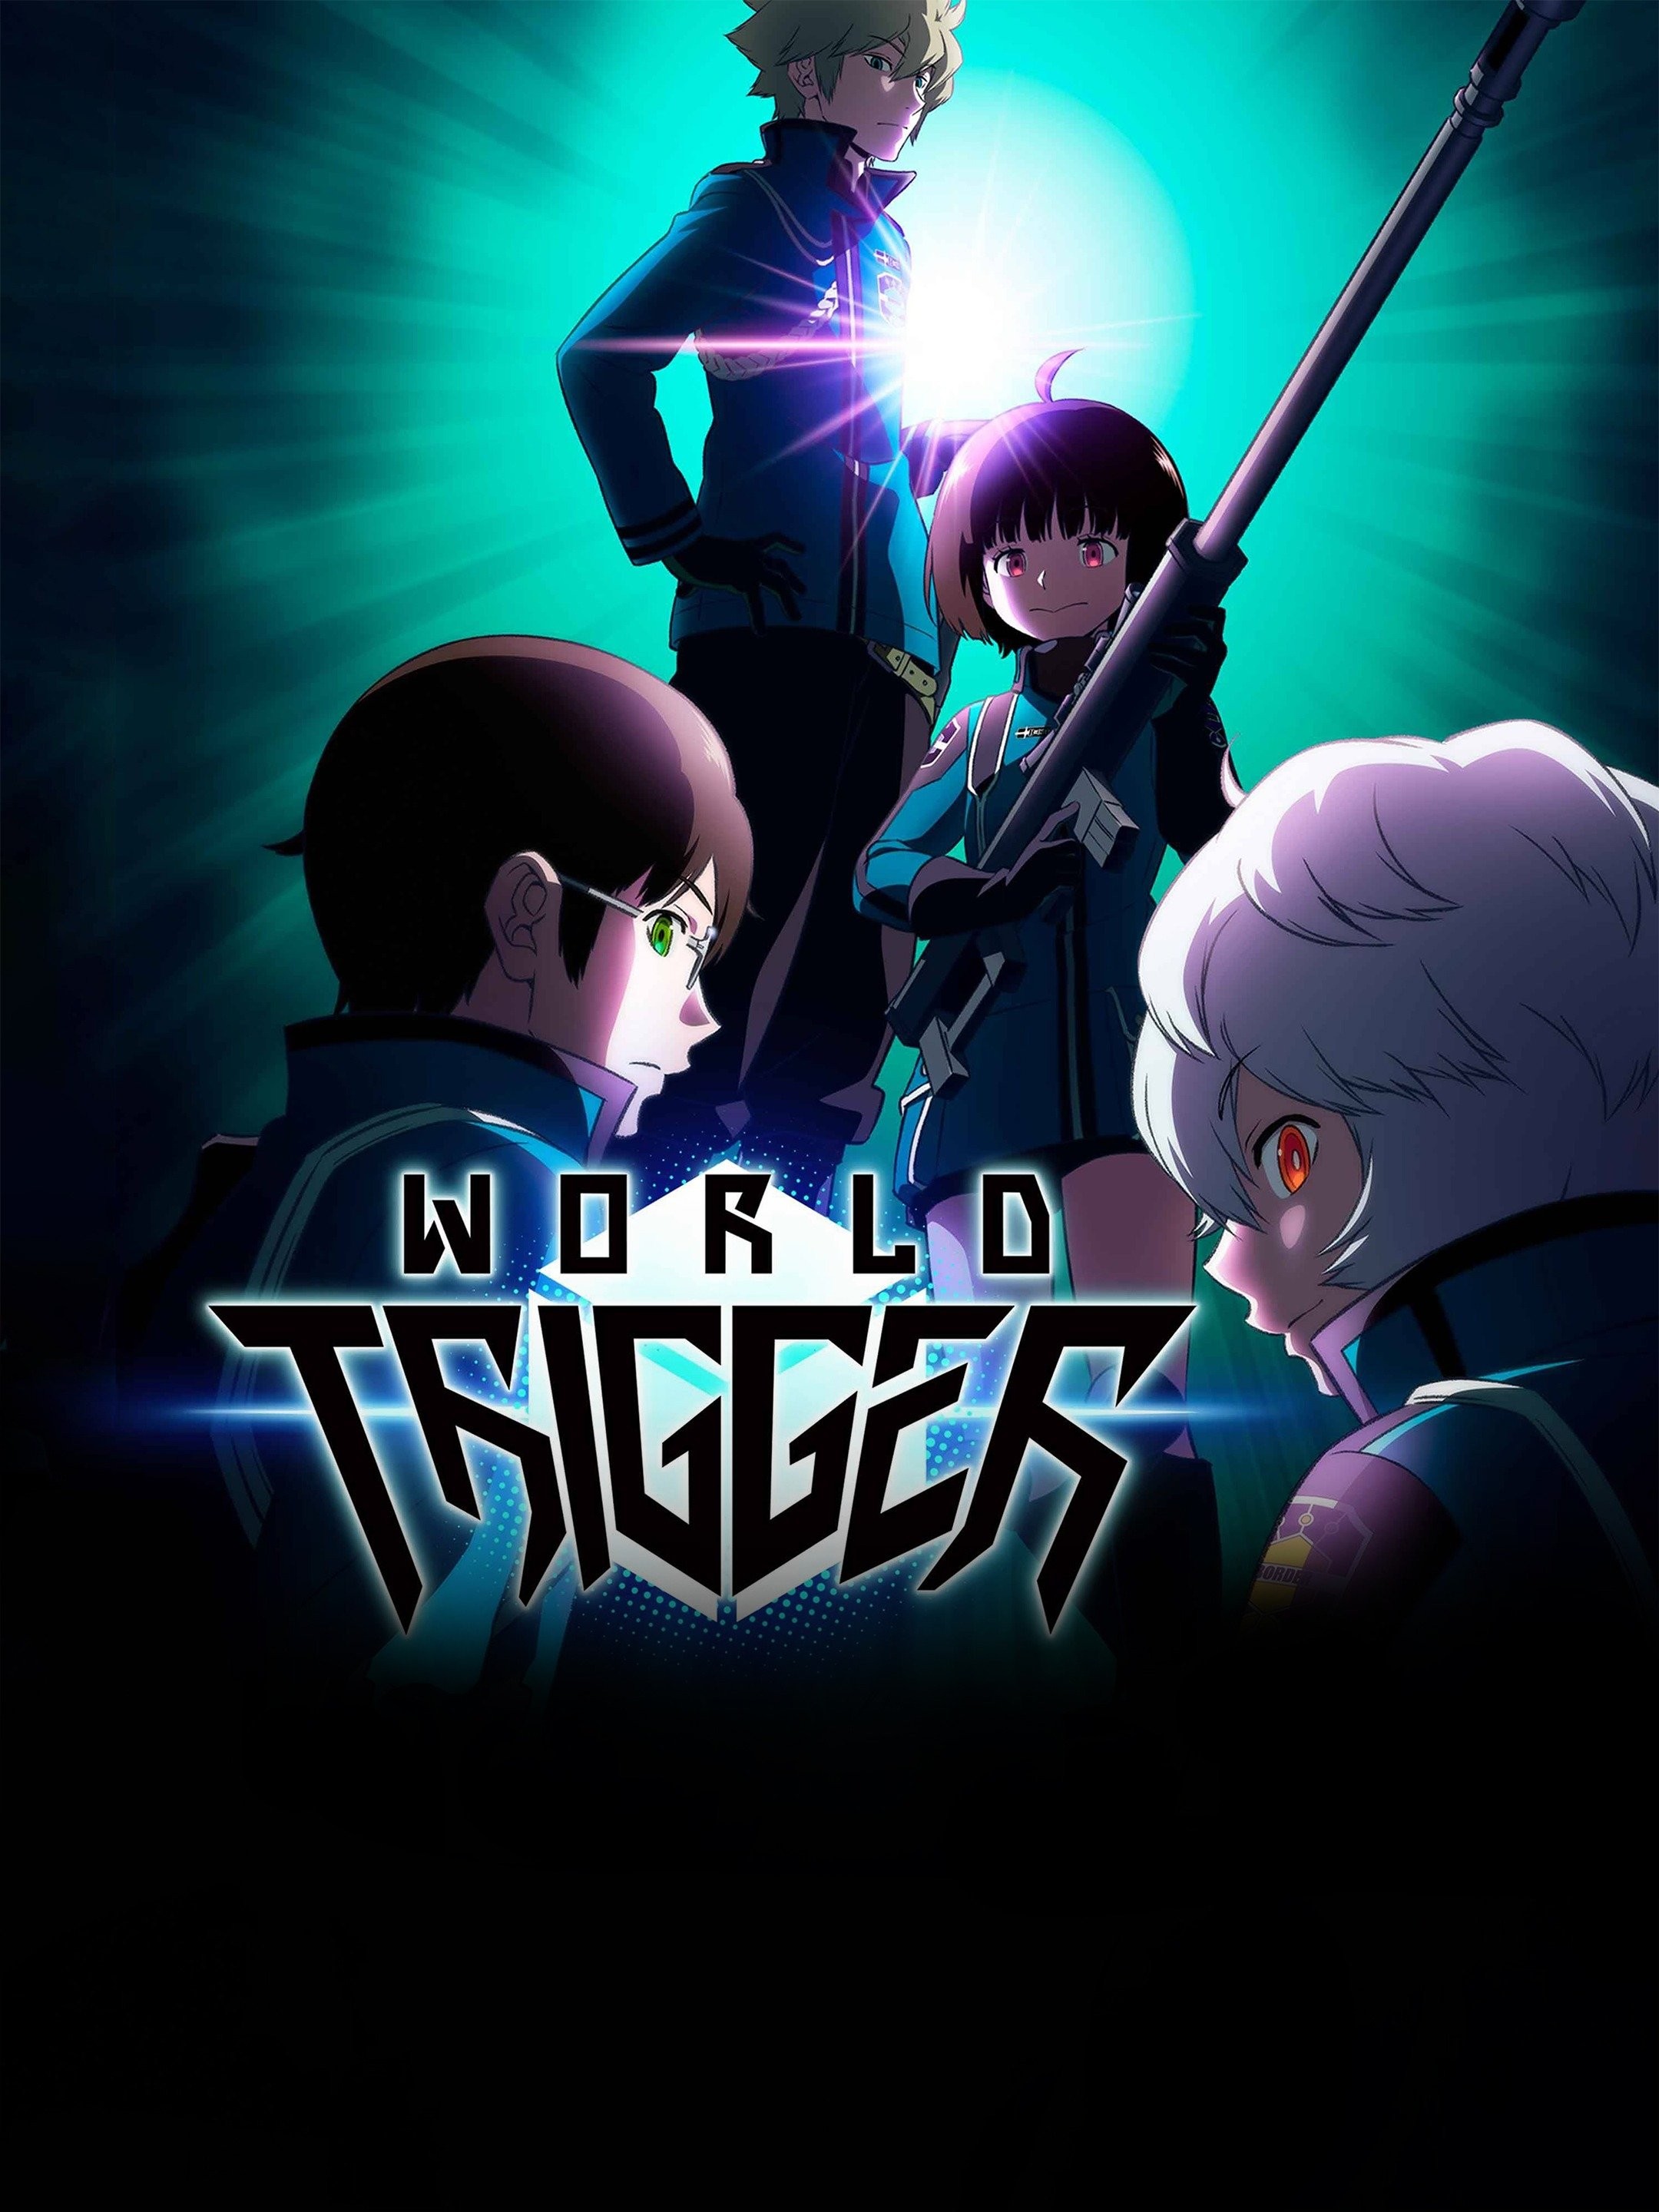 World Trigger 3rd Season Anime Reveals 4 More Cast Members - News